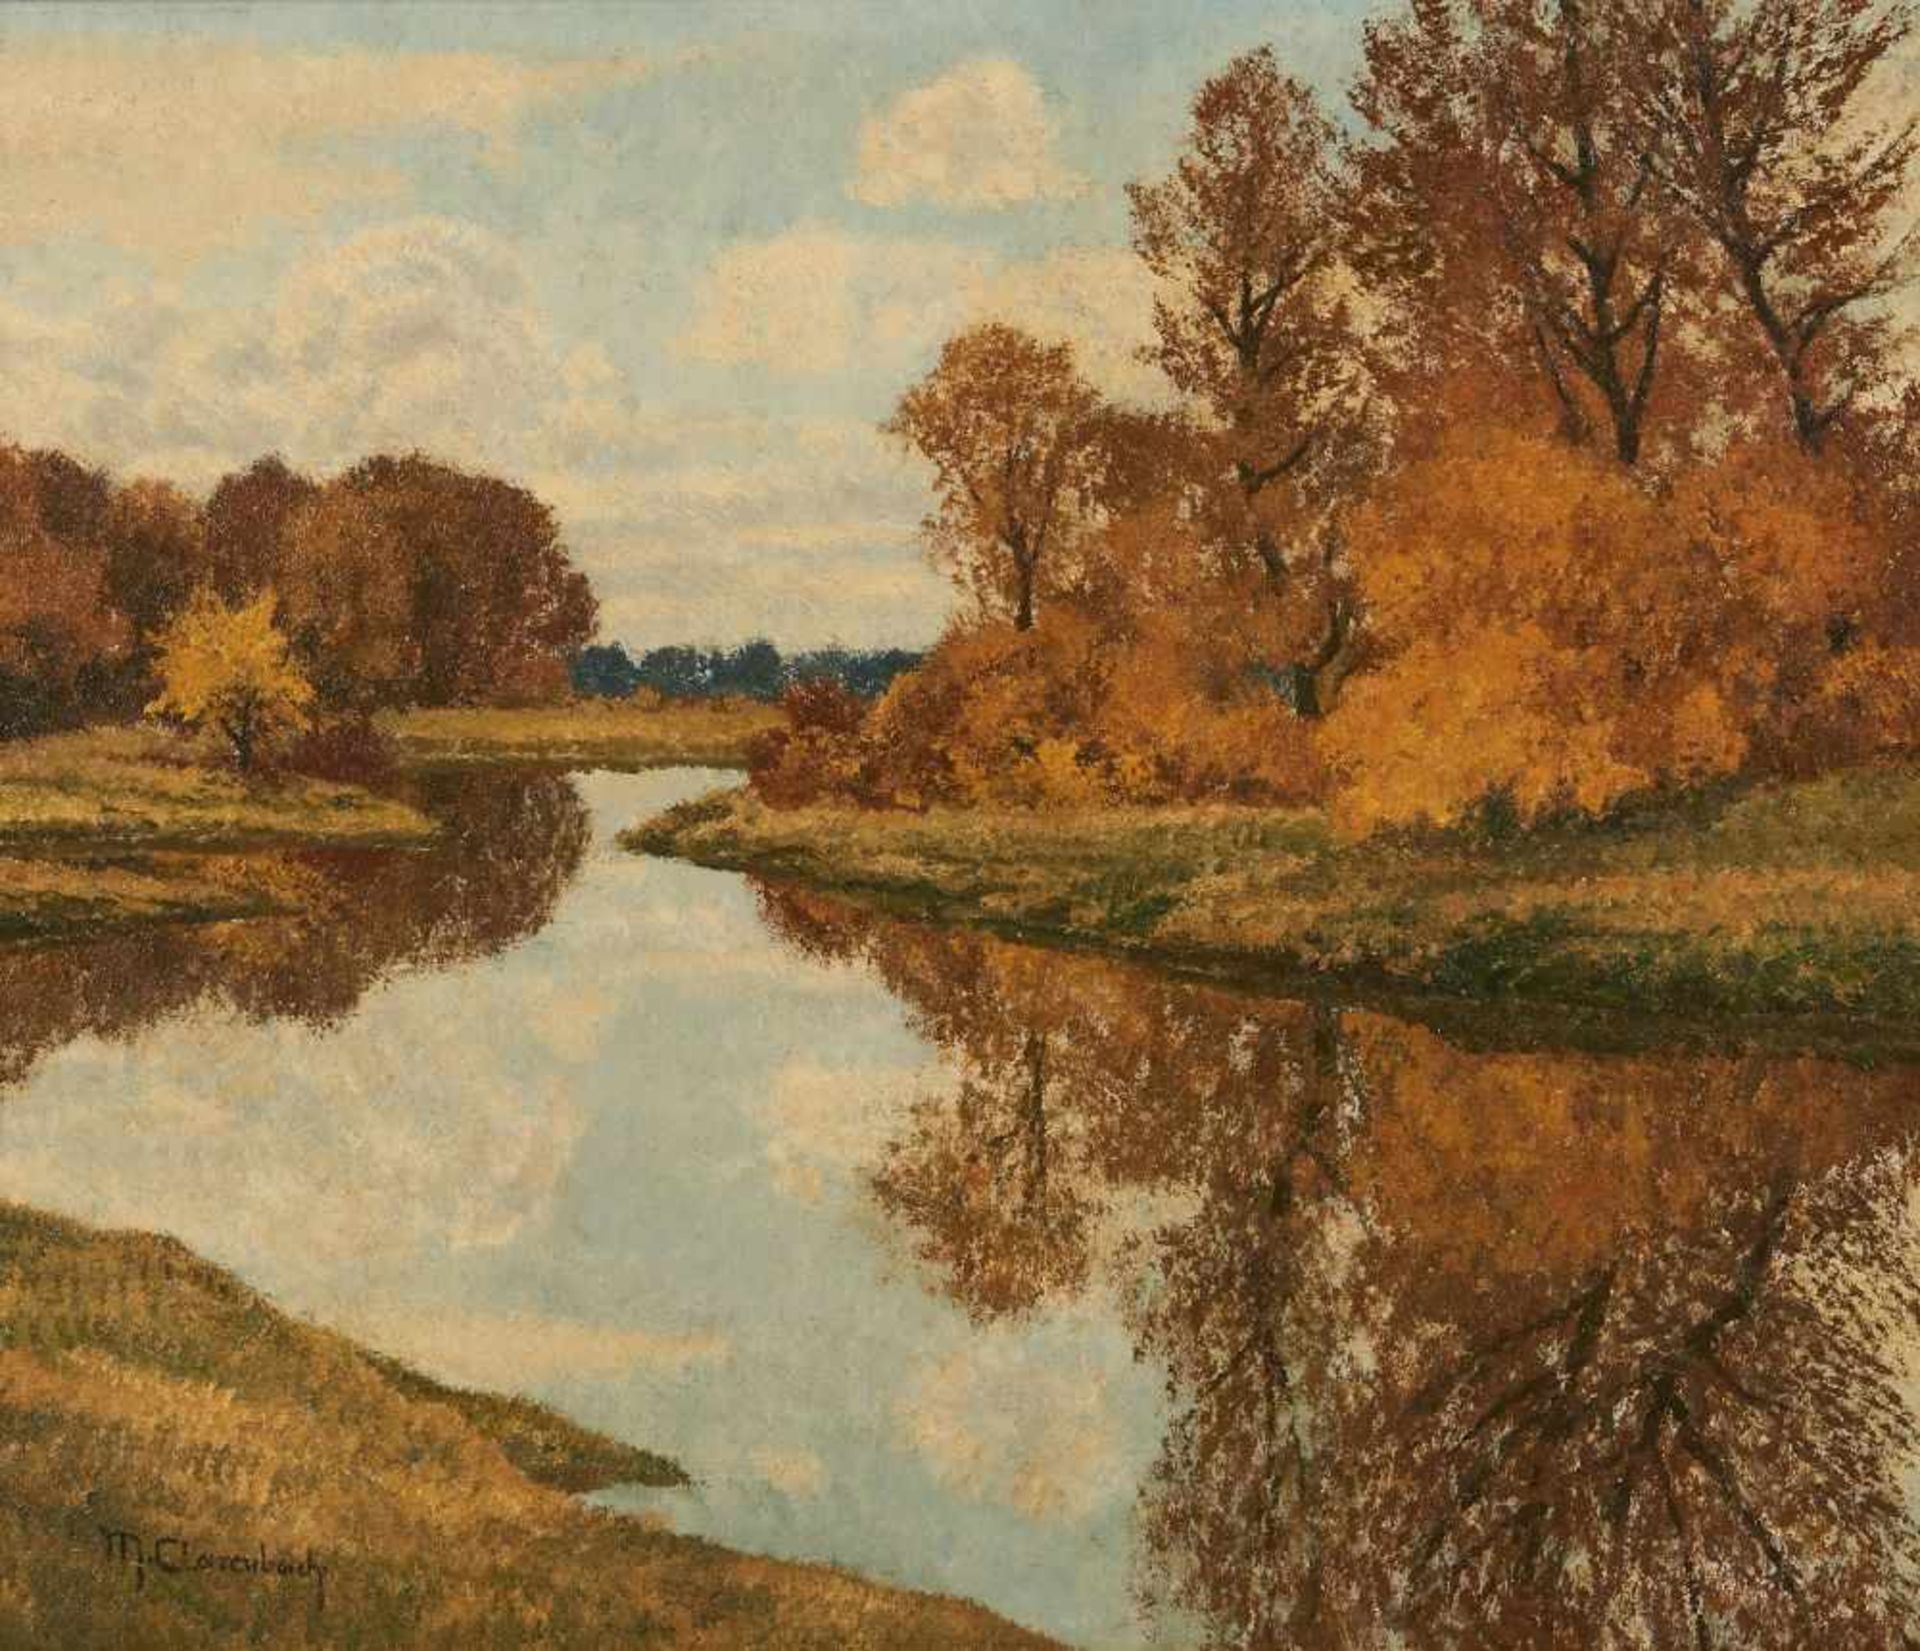 HerbsttagMax Clarenbach, (1880-1952)Links unten signiert "M.Clarenbach", Öl auf Platte, gerahmt.